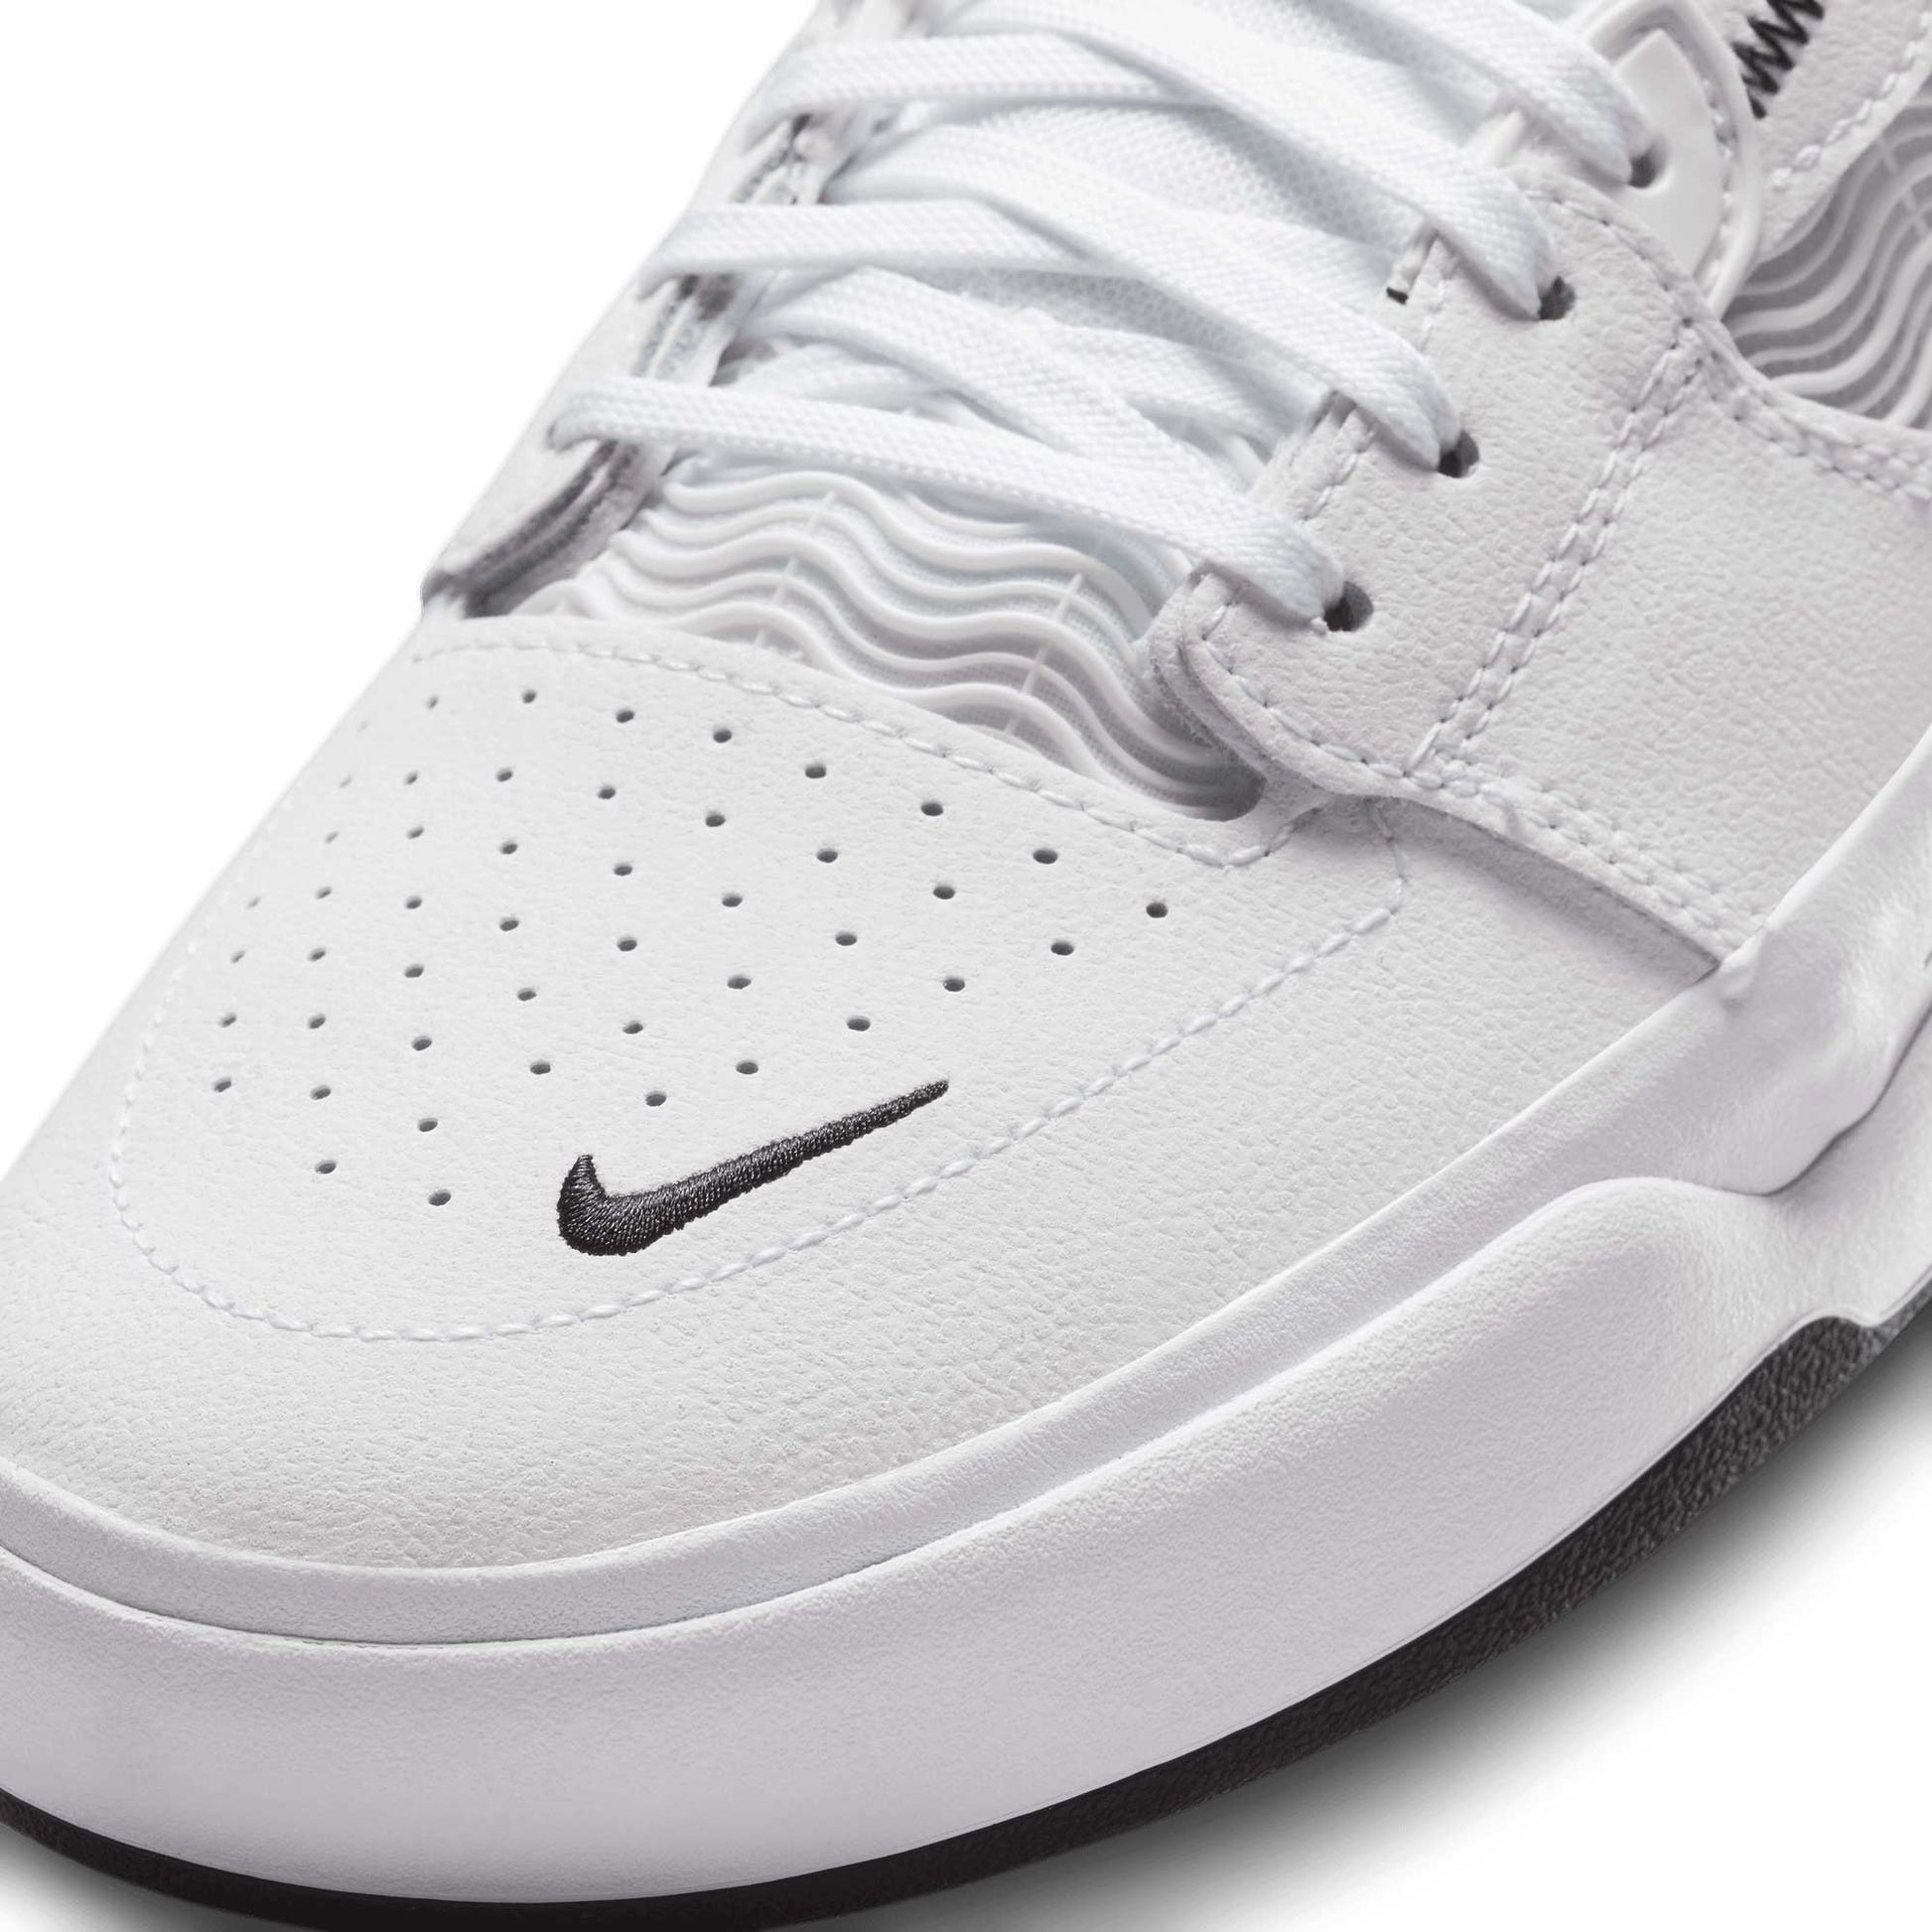 Nike SB Ishod Wair Premium, white/black-white-black - Tiki Room Skateboards - 10